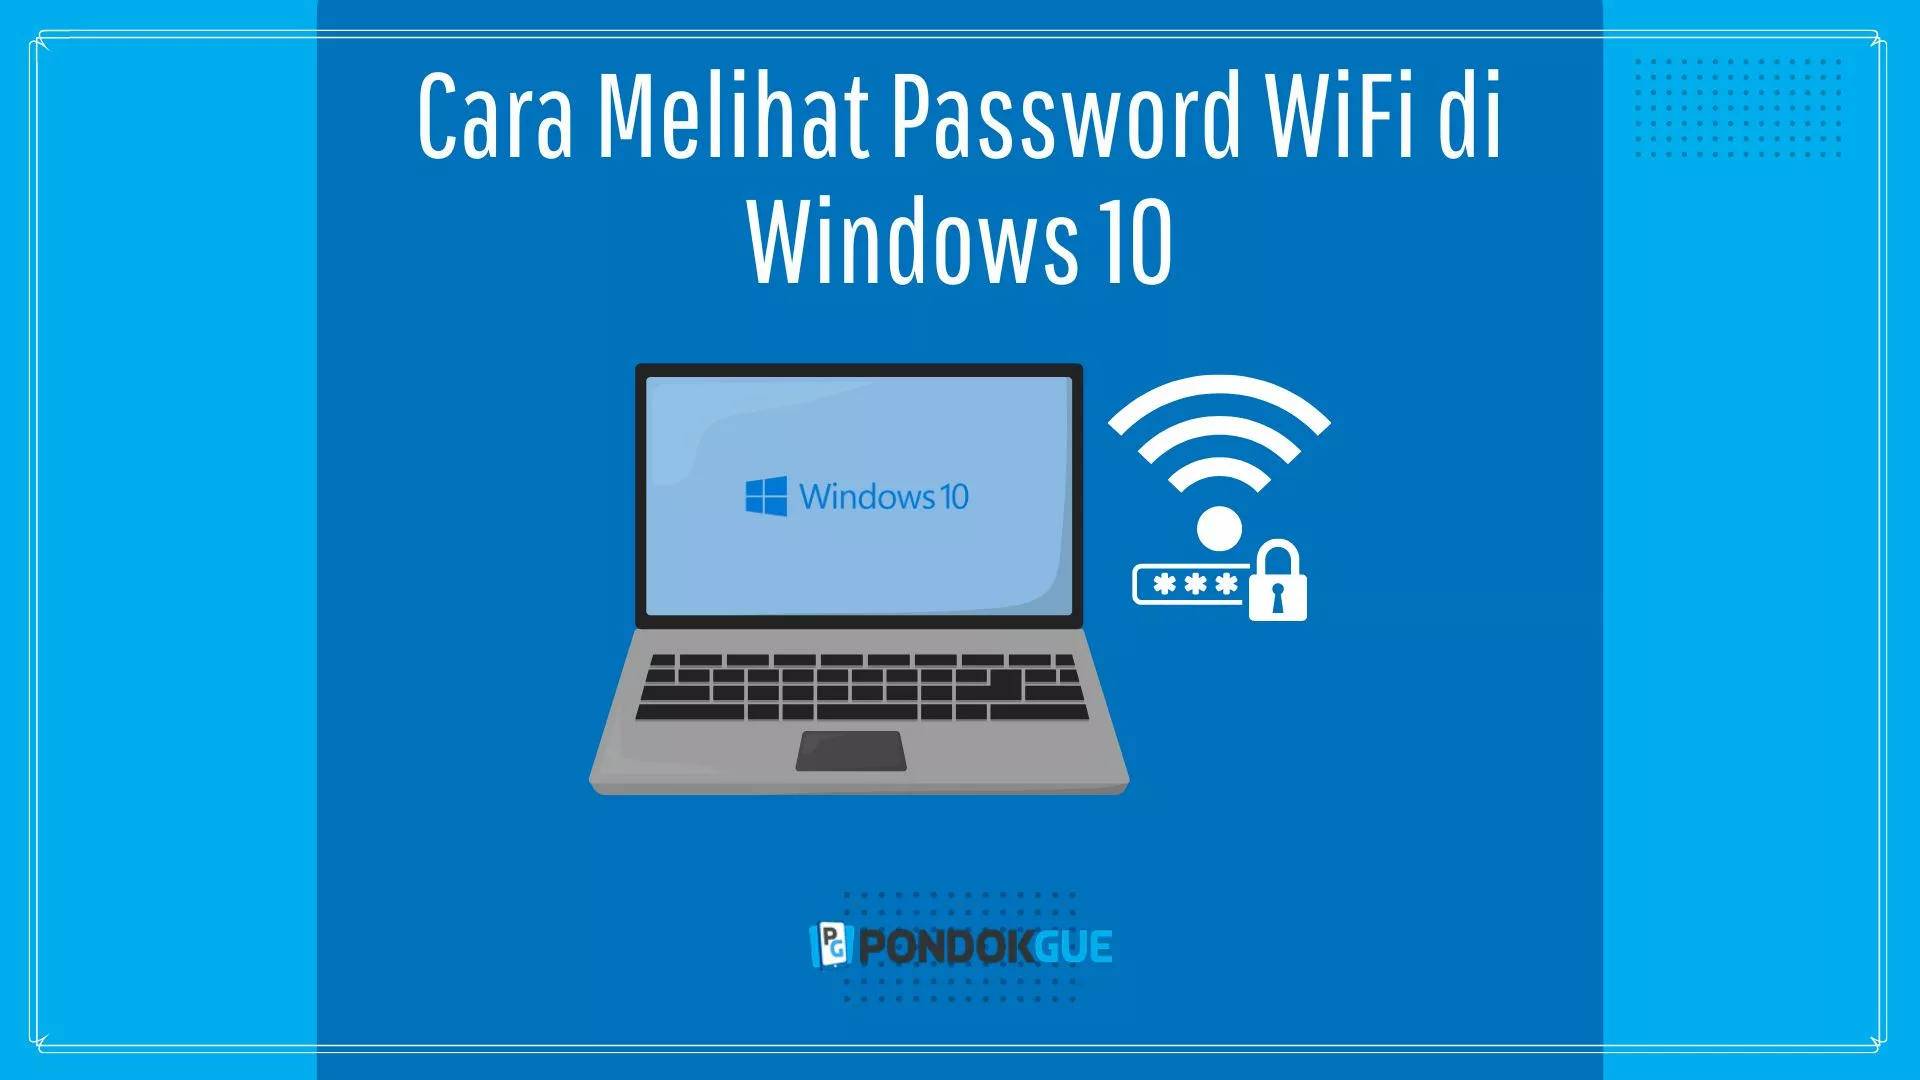 Cara Melihat Password WiFi di Windows 10 - Pondokgue.com